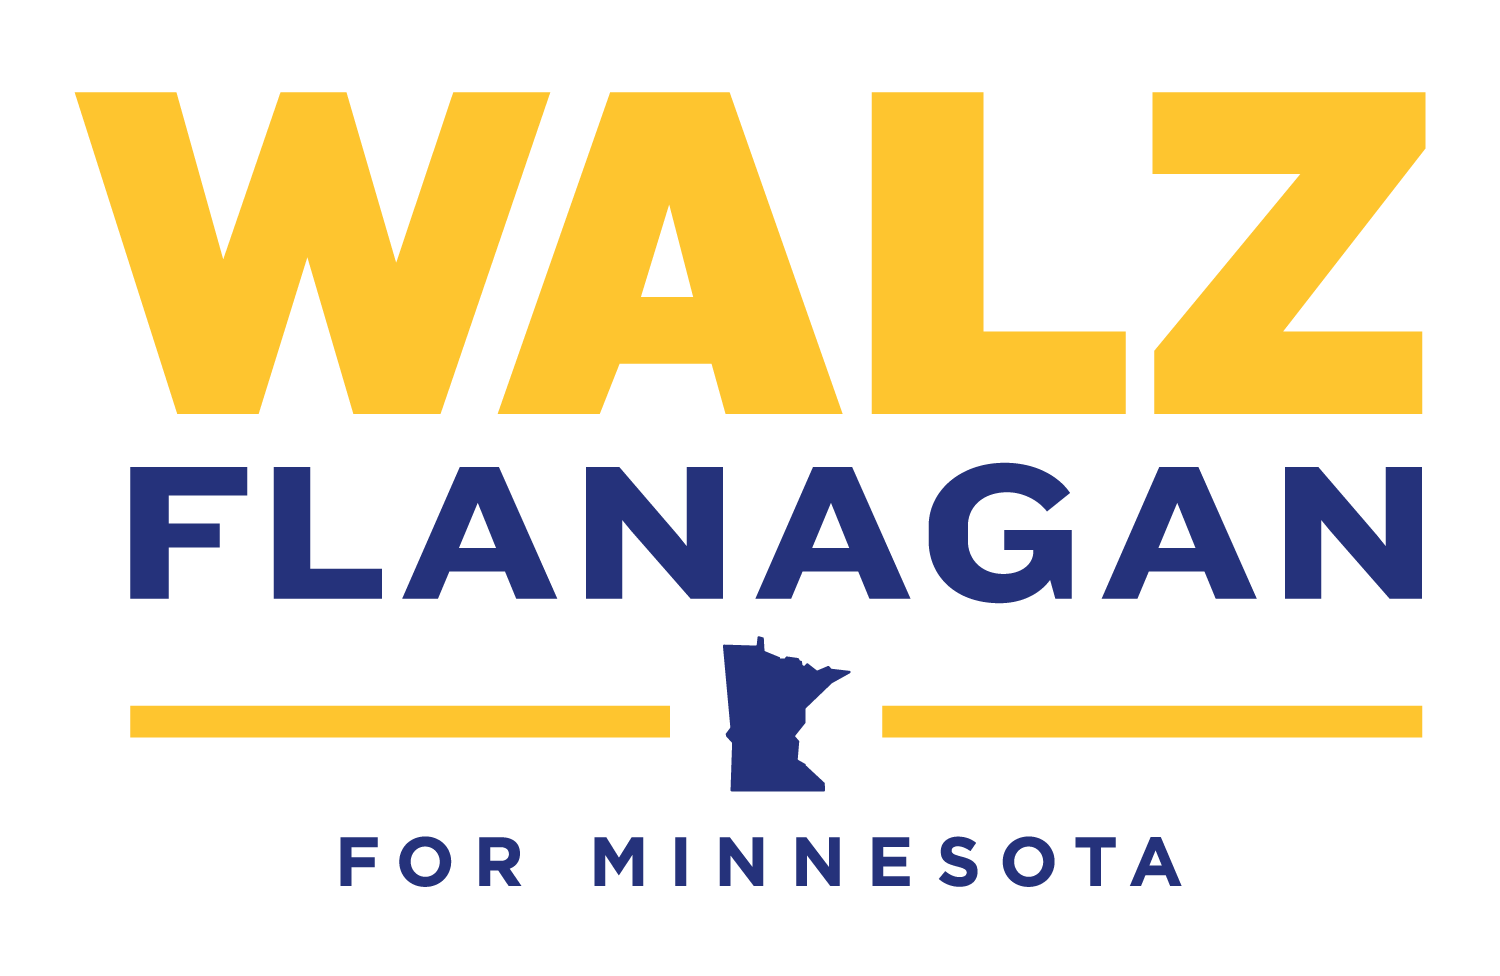 Flanagan Logo - Meet Tim Walz